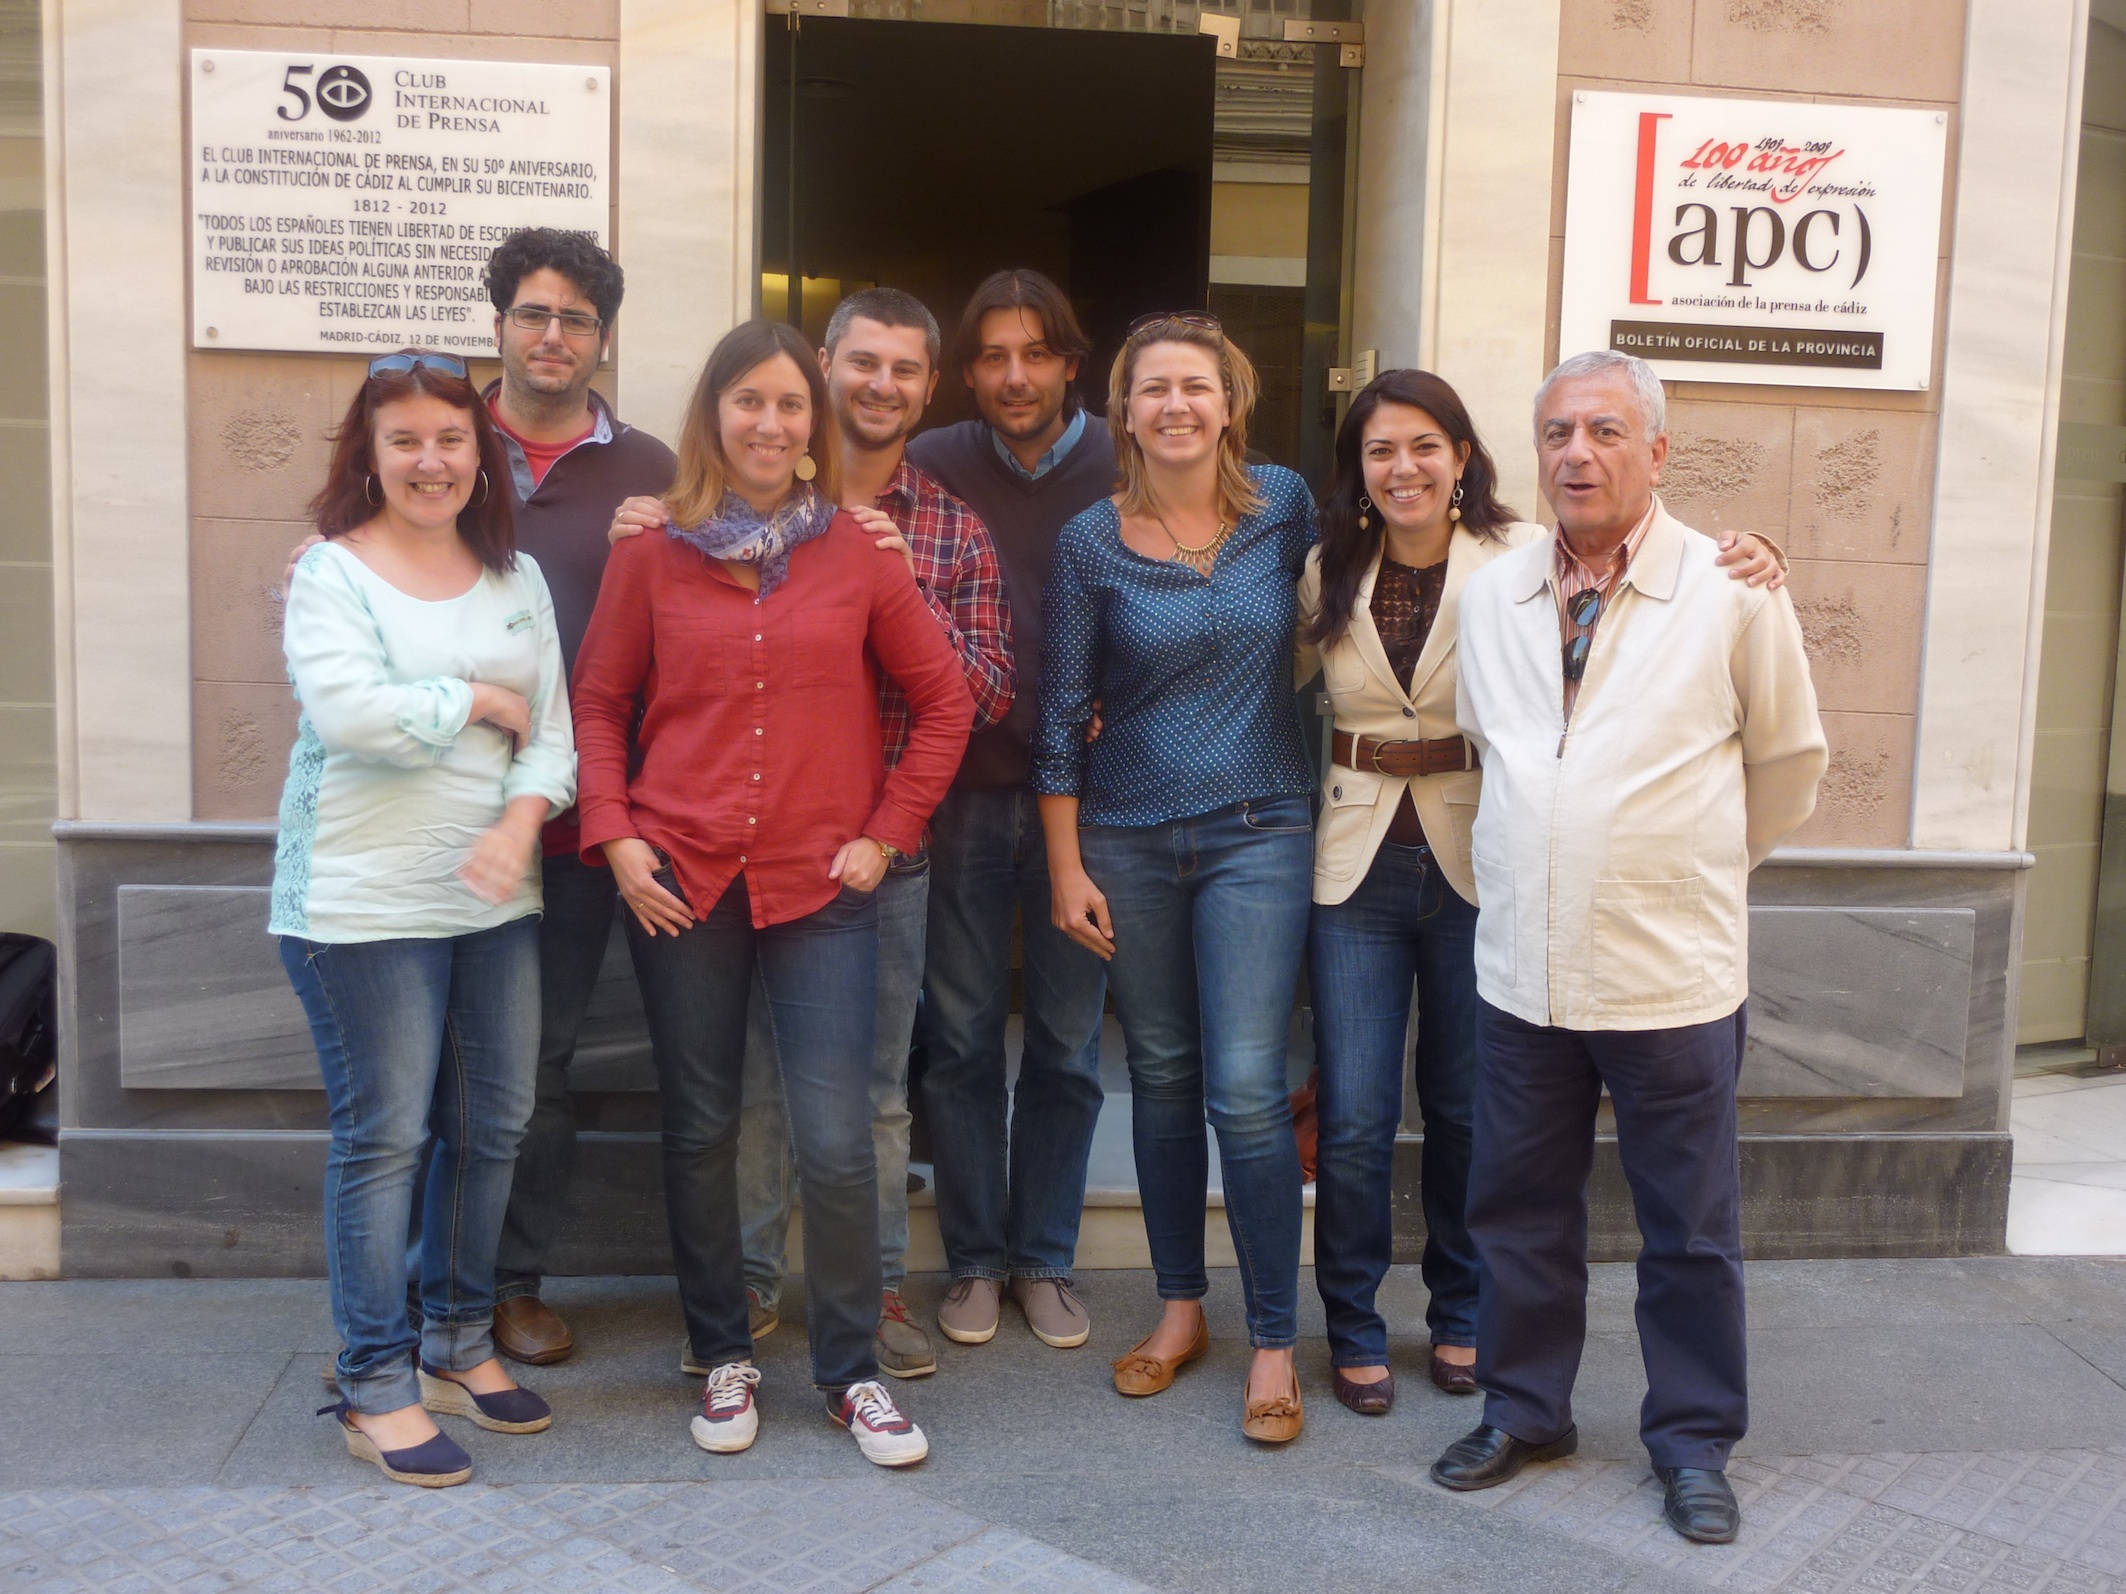 En la imagen, foto de familia de la nueva junta directiva de la Asociación de la Prensa de Cádiz. Foto: APC